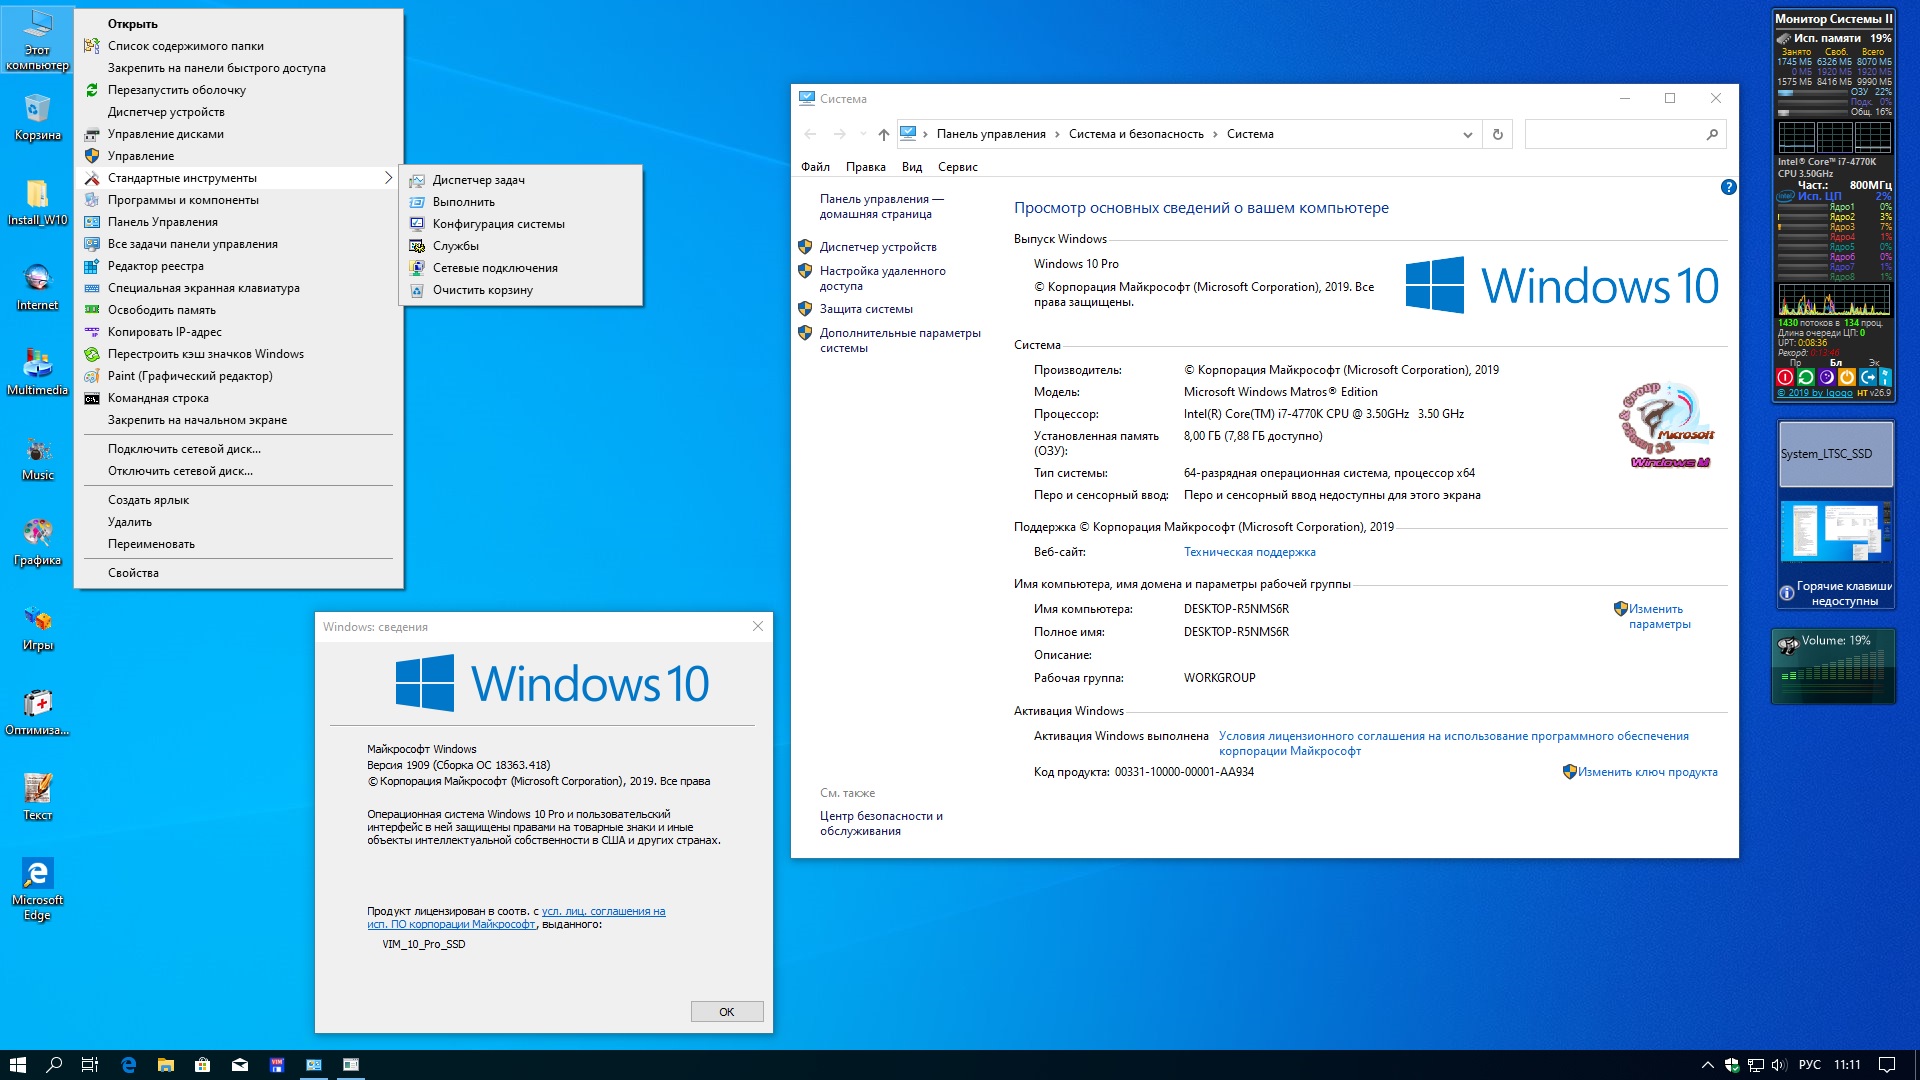 Windows 10 list. • ОС Microsoft Windows 10 Pro. Установленная Windows 10. Система виндовс 10. Образ Windows.